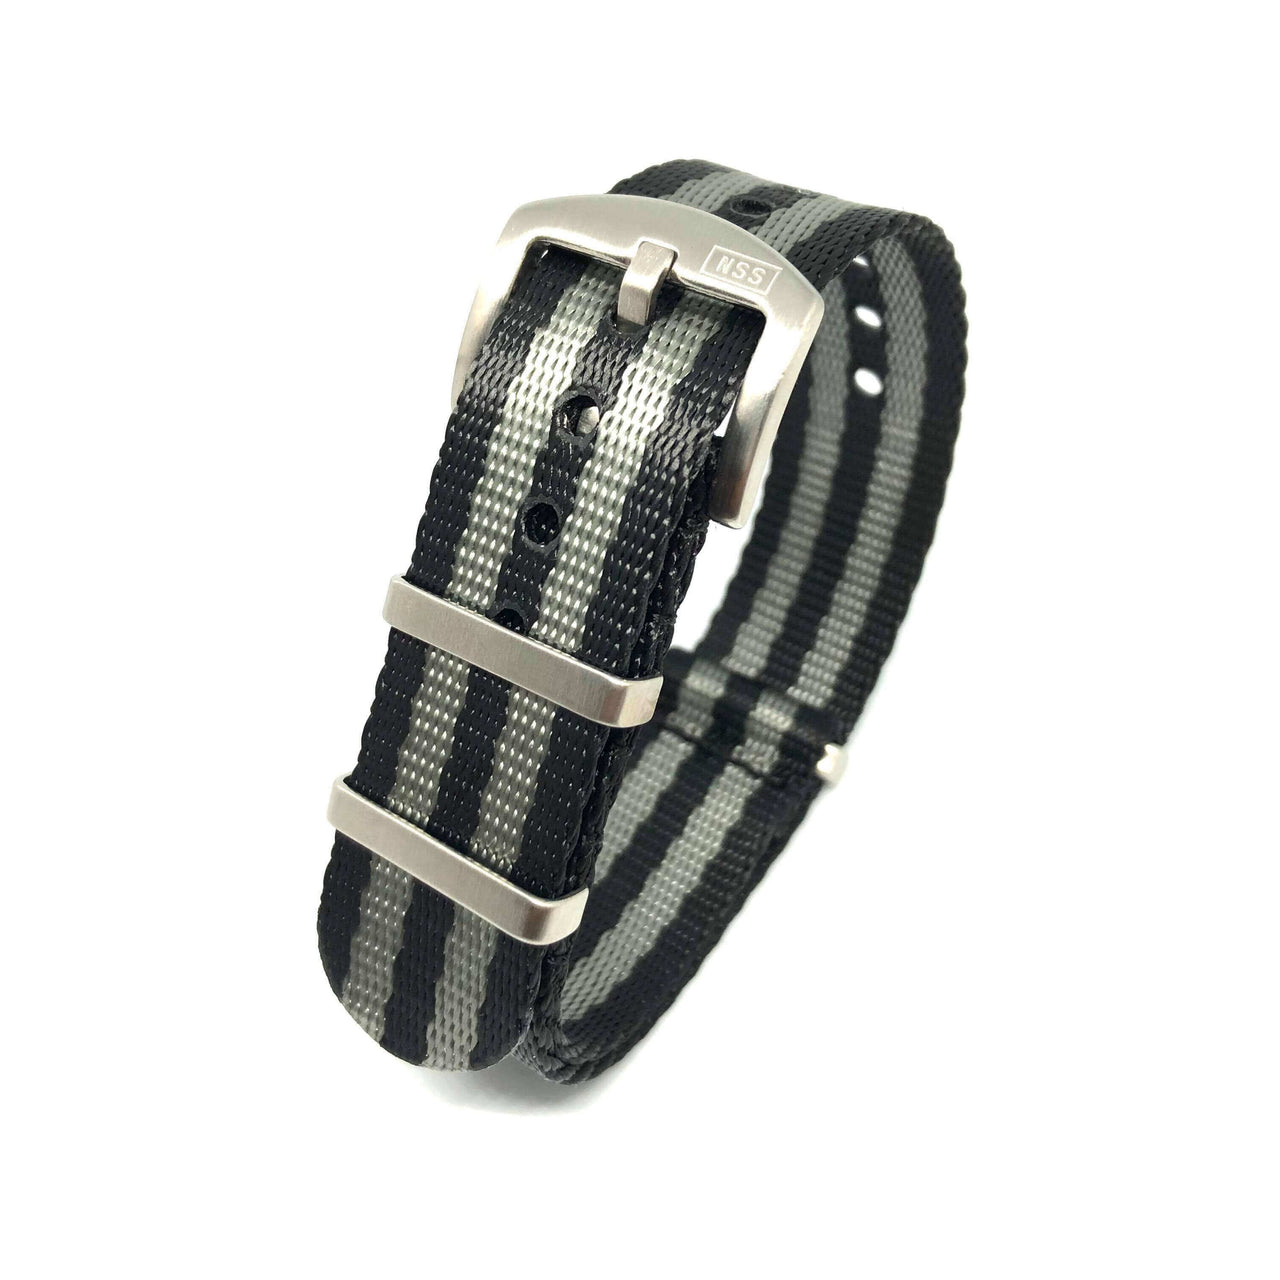 Premium Thick Woven Military Style Watch Strap - Black & Grey Bond